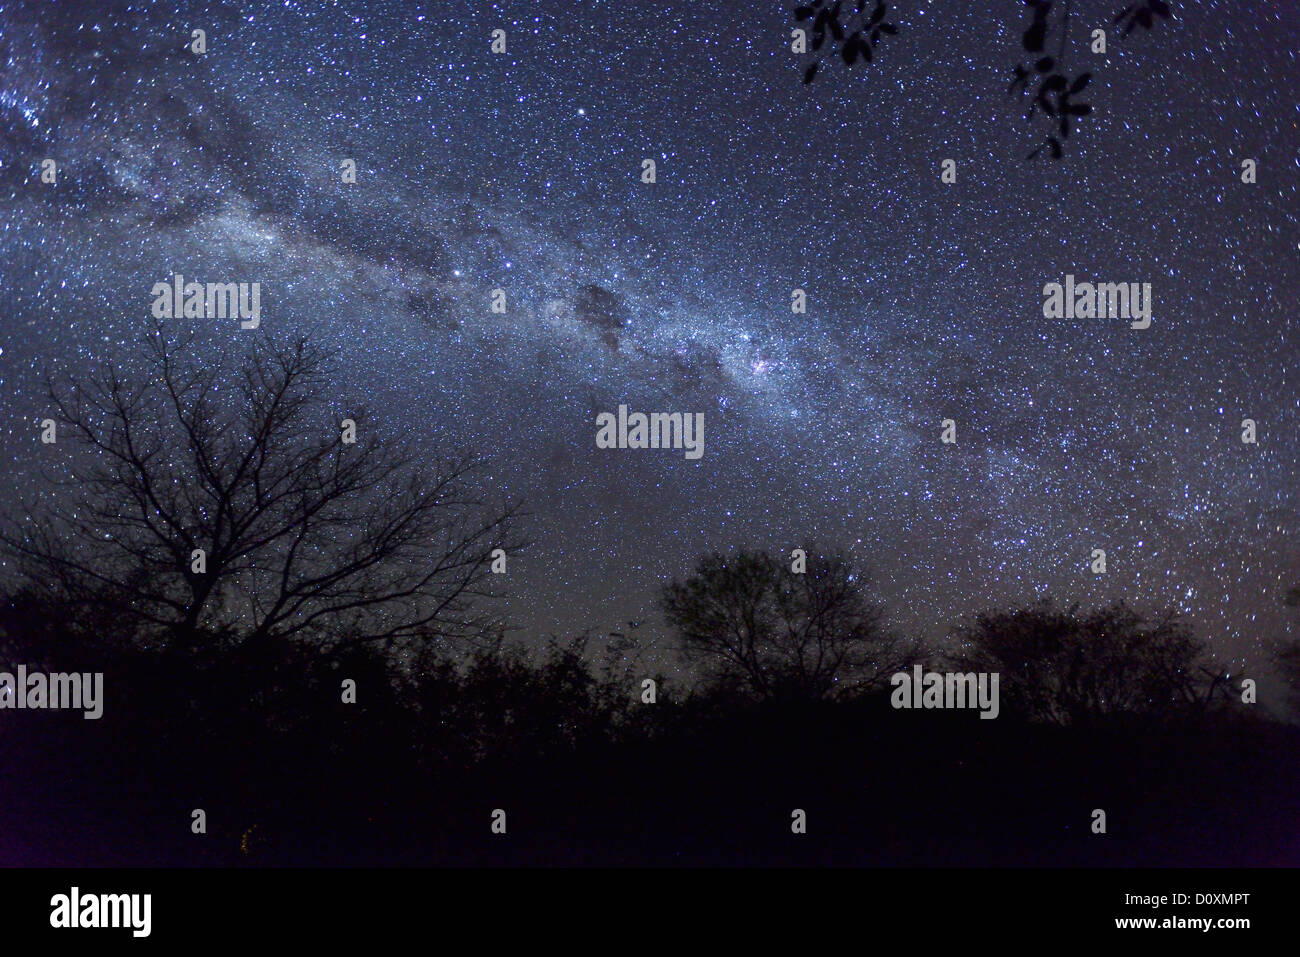 Africa, Southern, Namibiai, Nacht, Himmel, Sterne, Astro, Fotografie, spangled Himmel, Sternenhimmel, Grootfontein Stockfoto